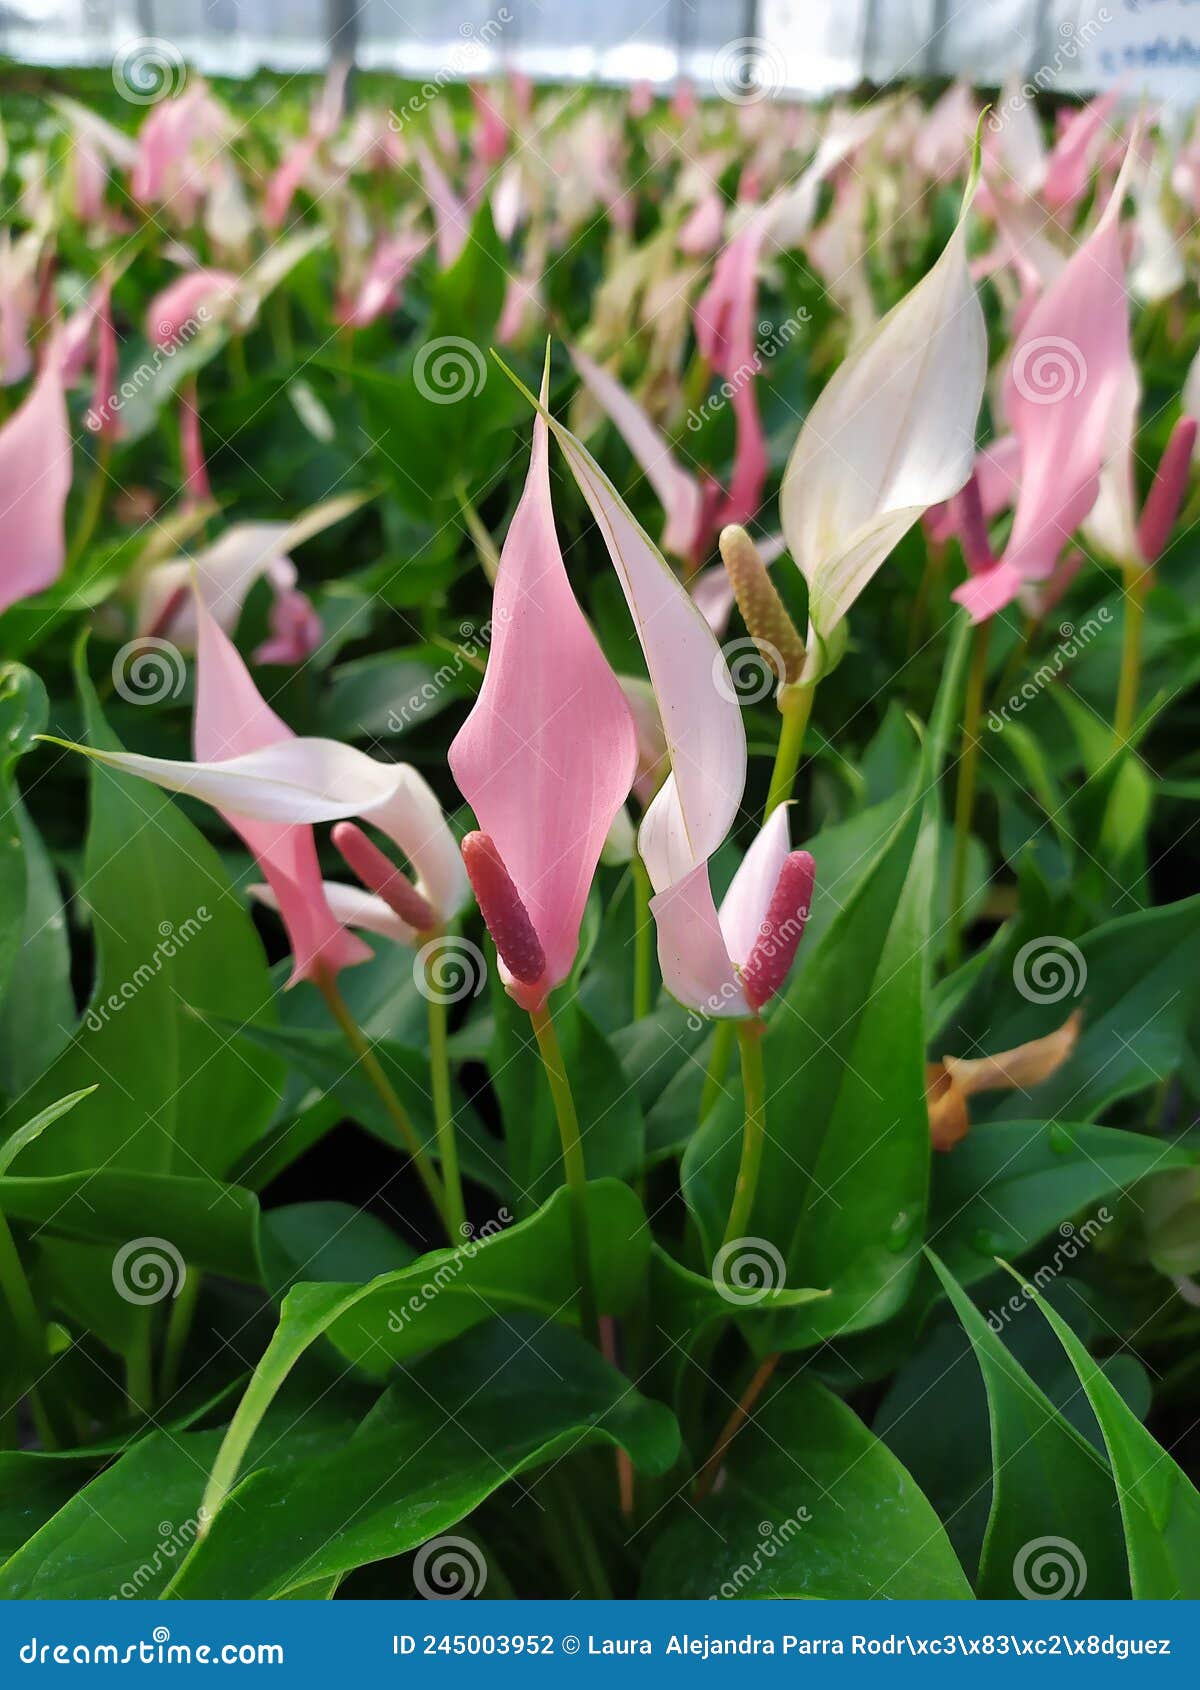 a group of pink anthurium flowers. un grupo de flores anturiana rosadas